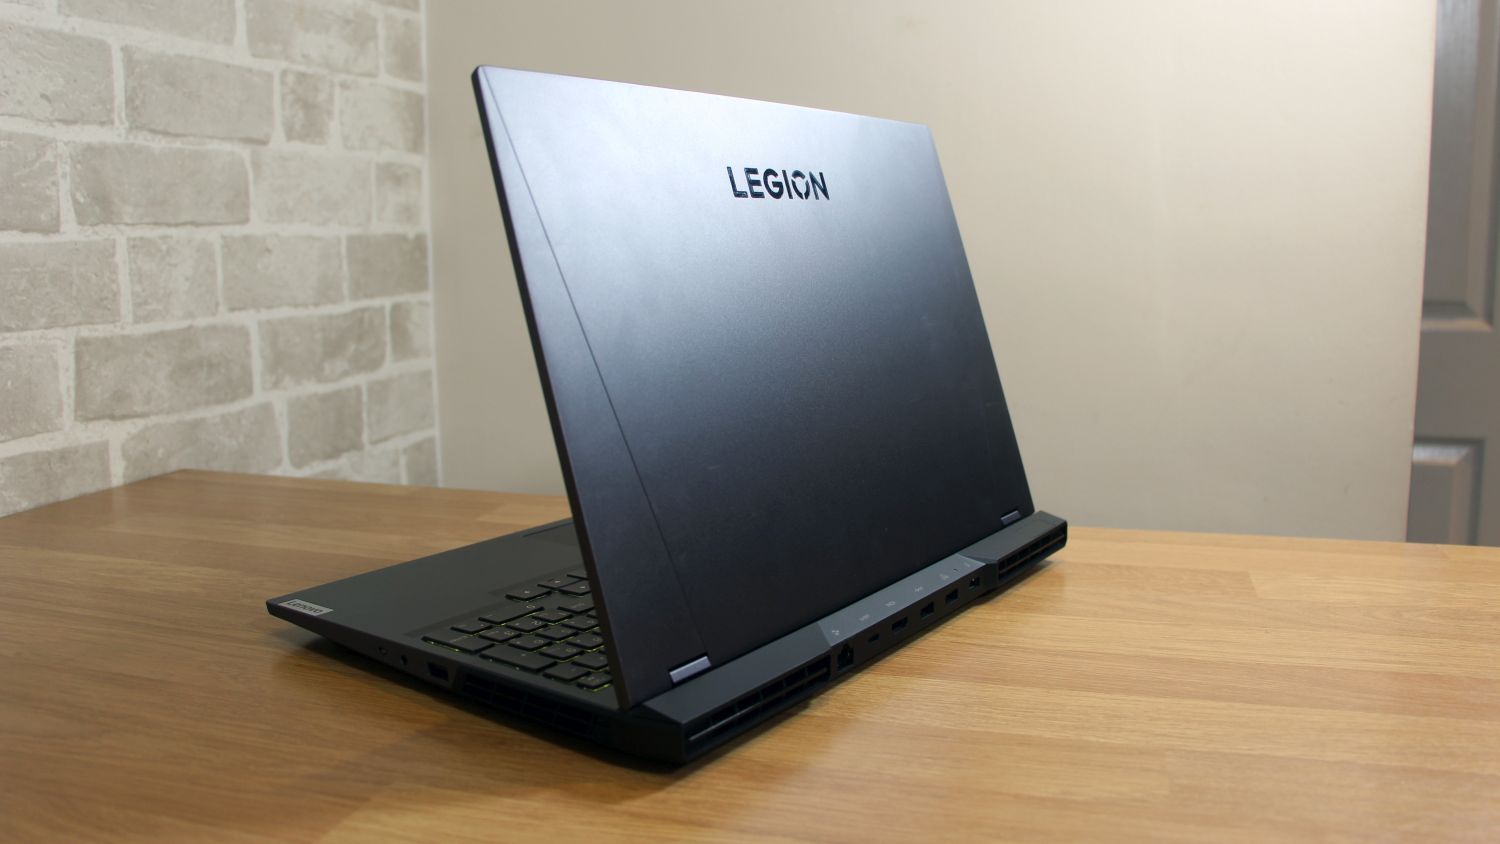 Lenovo Legion 5i Pro 09_laptop abierto, vista desde atrás